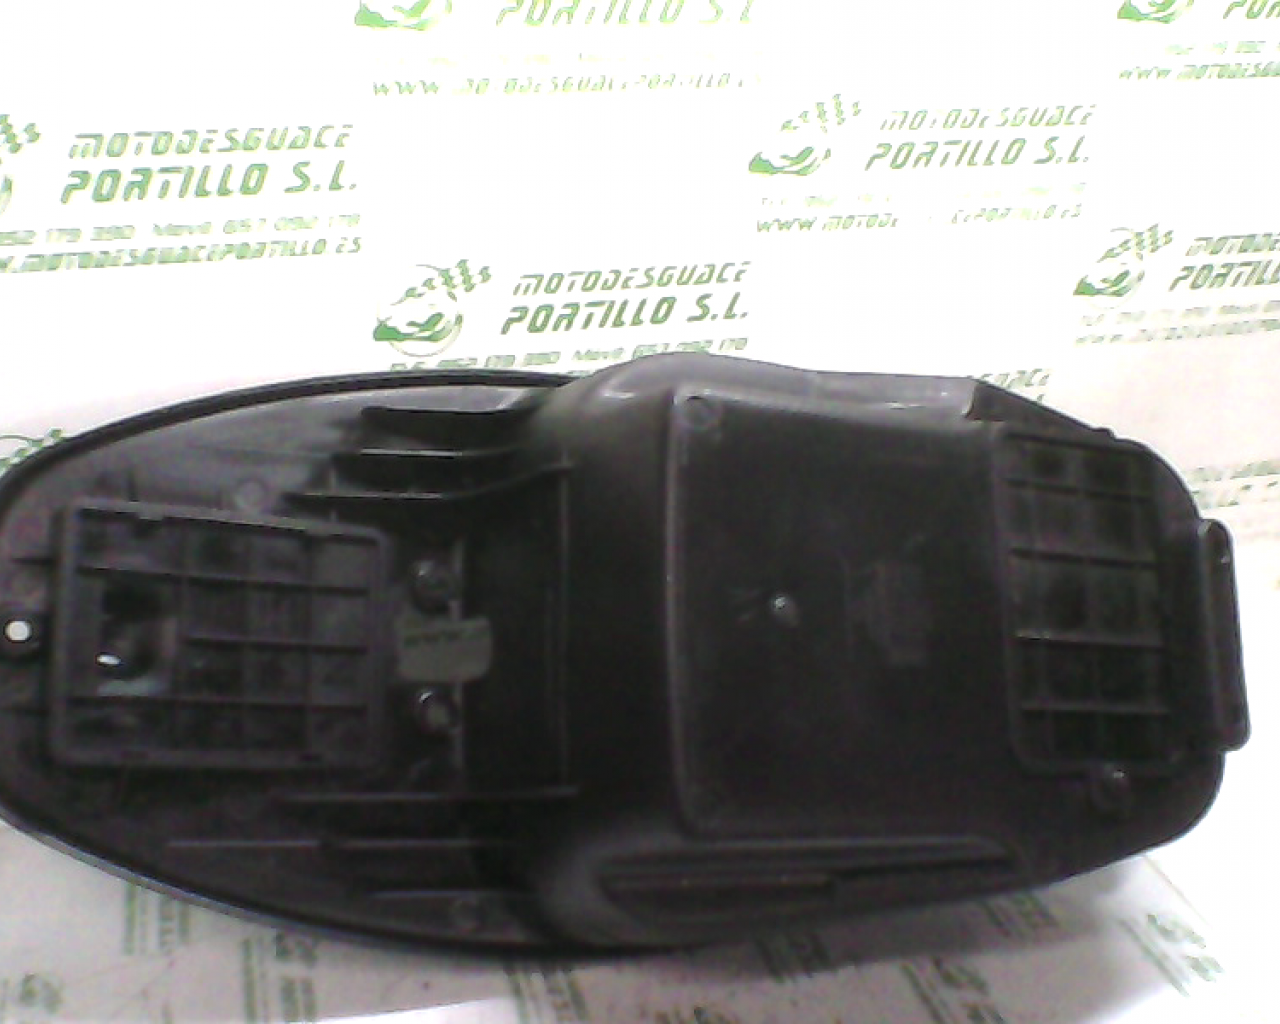 Porta-casco Daelim Besbi 125 (2010-2011)